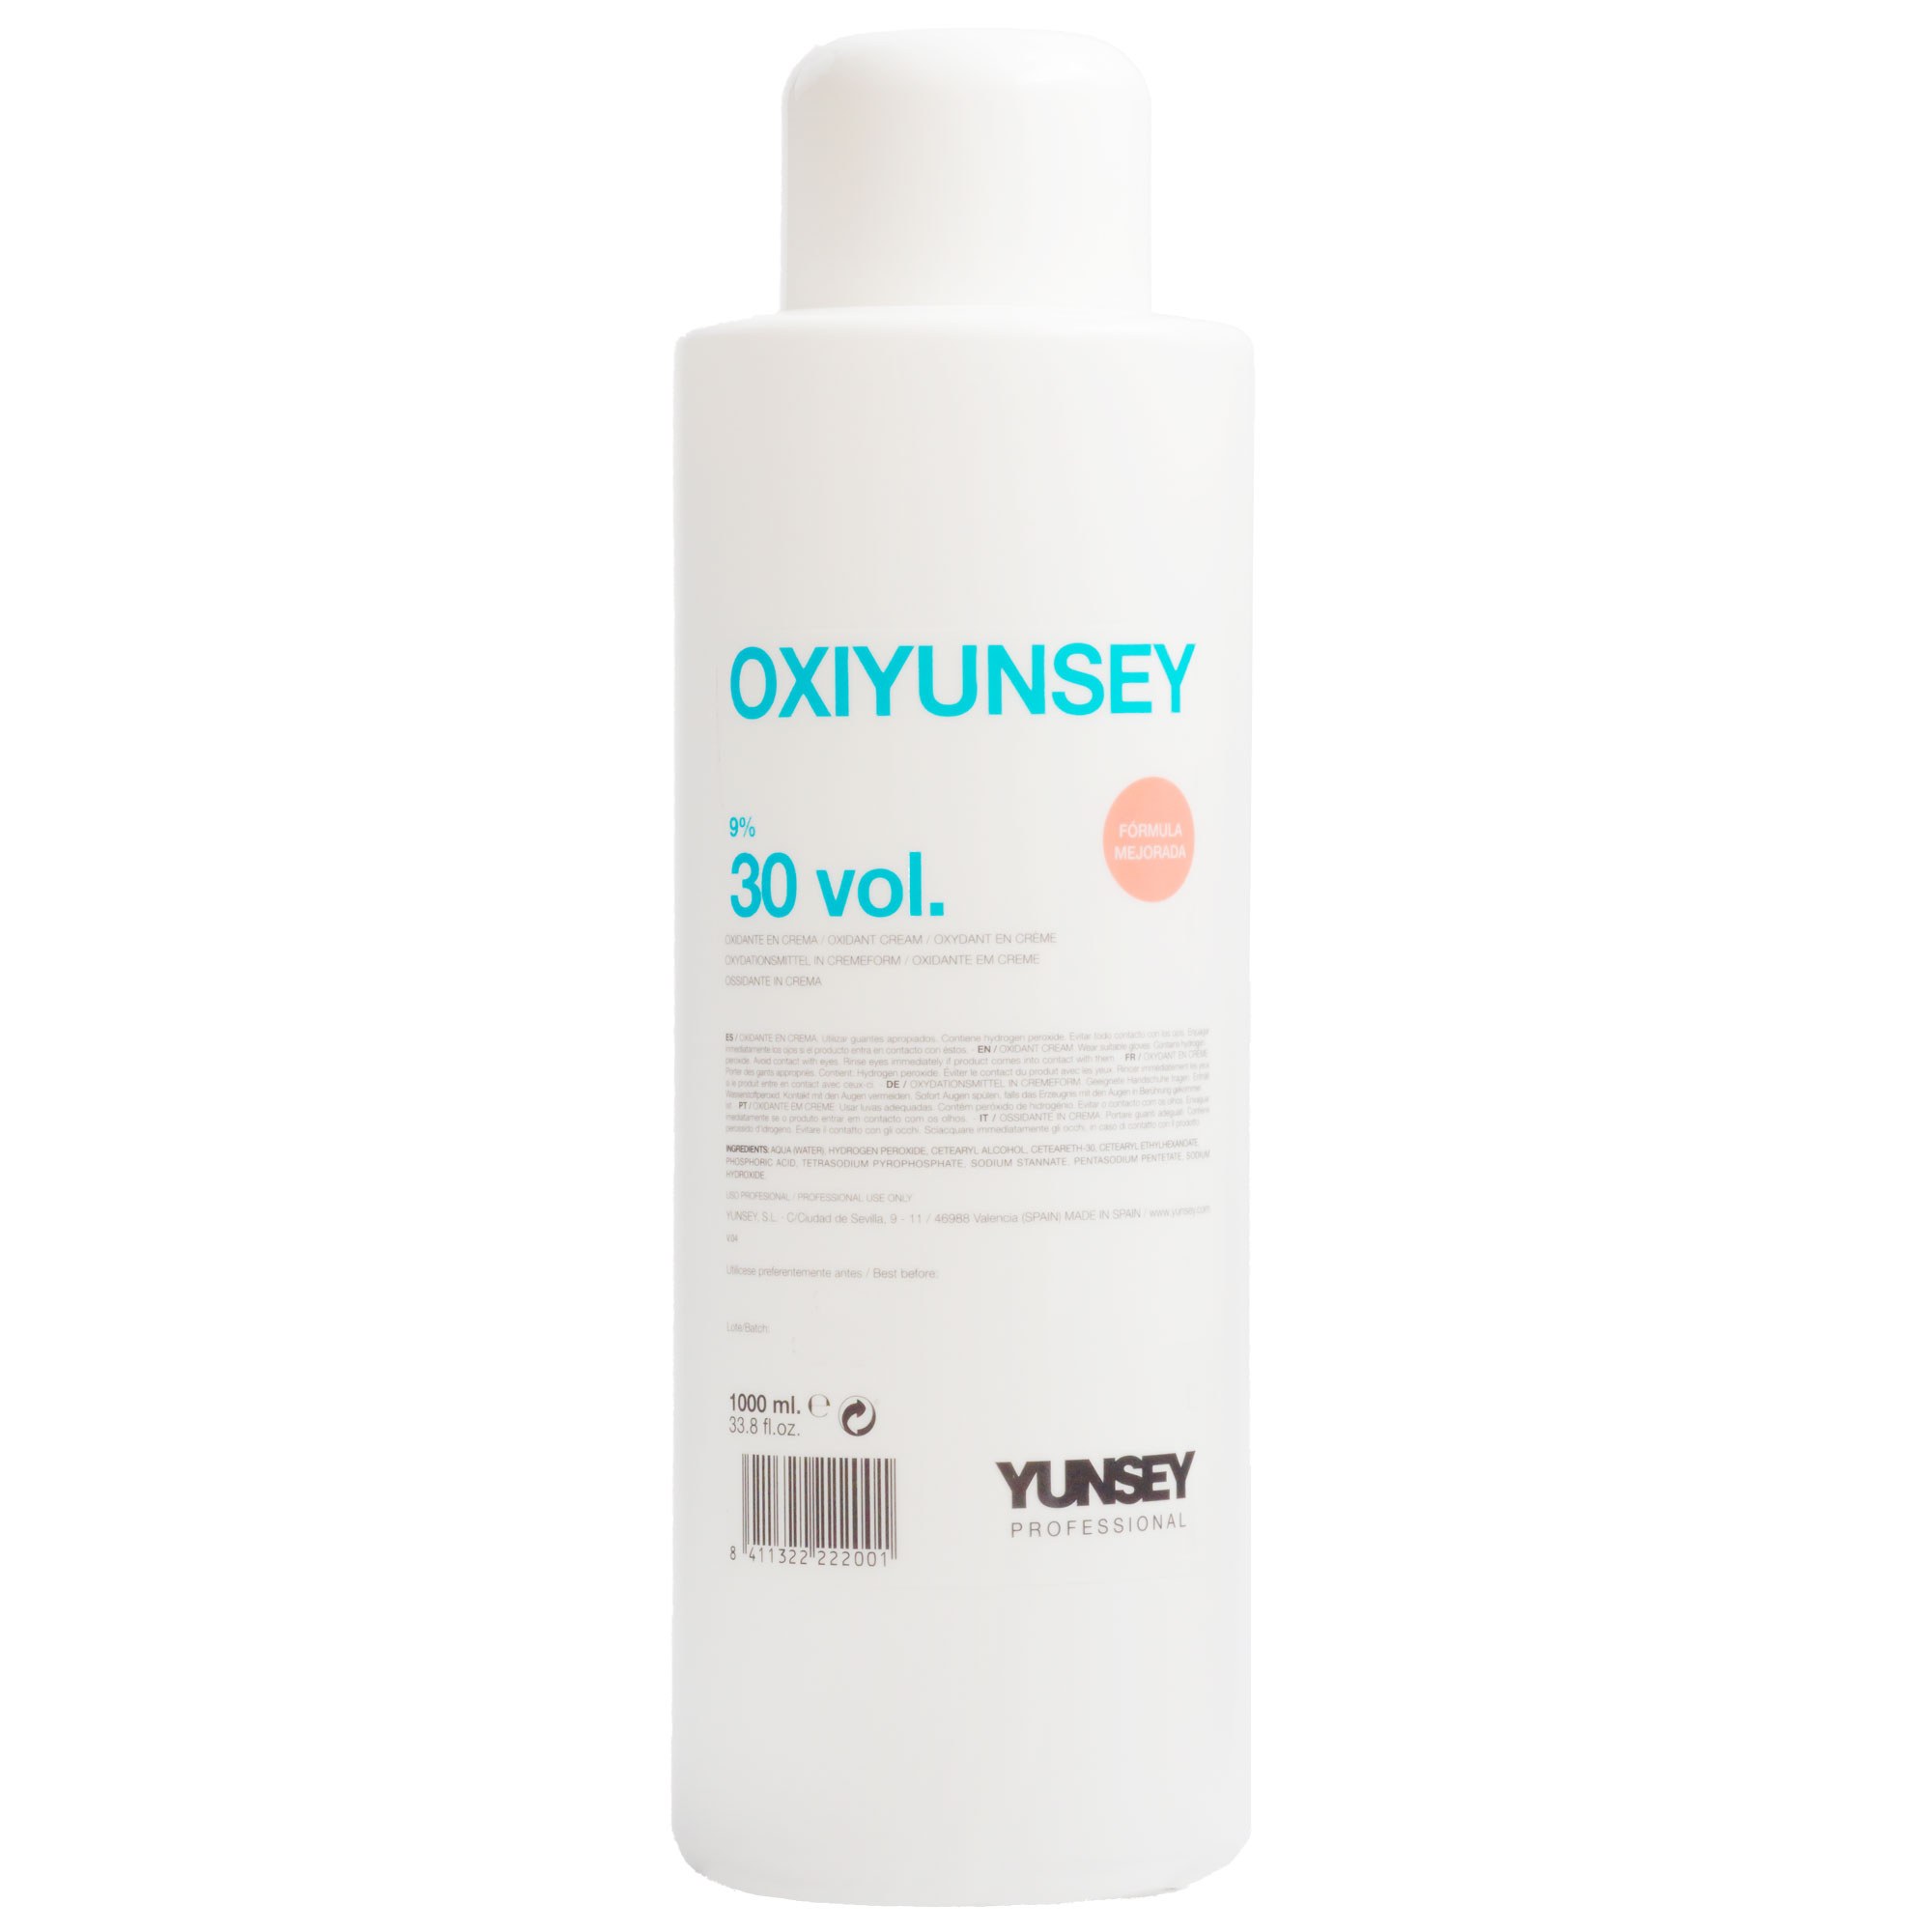 Yunsey Professional OXIYUNSEY Developer 30 Volume